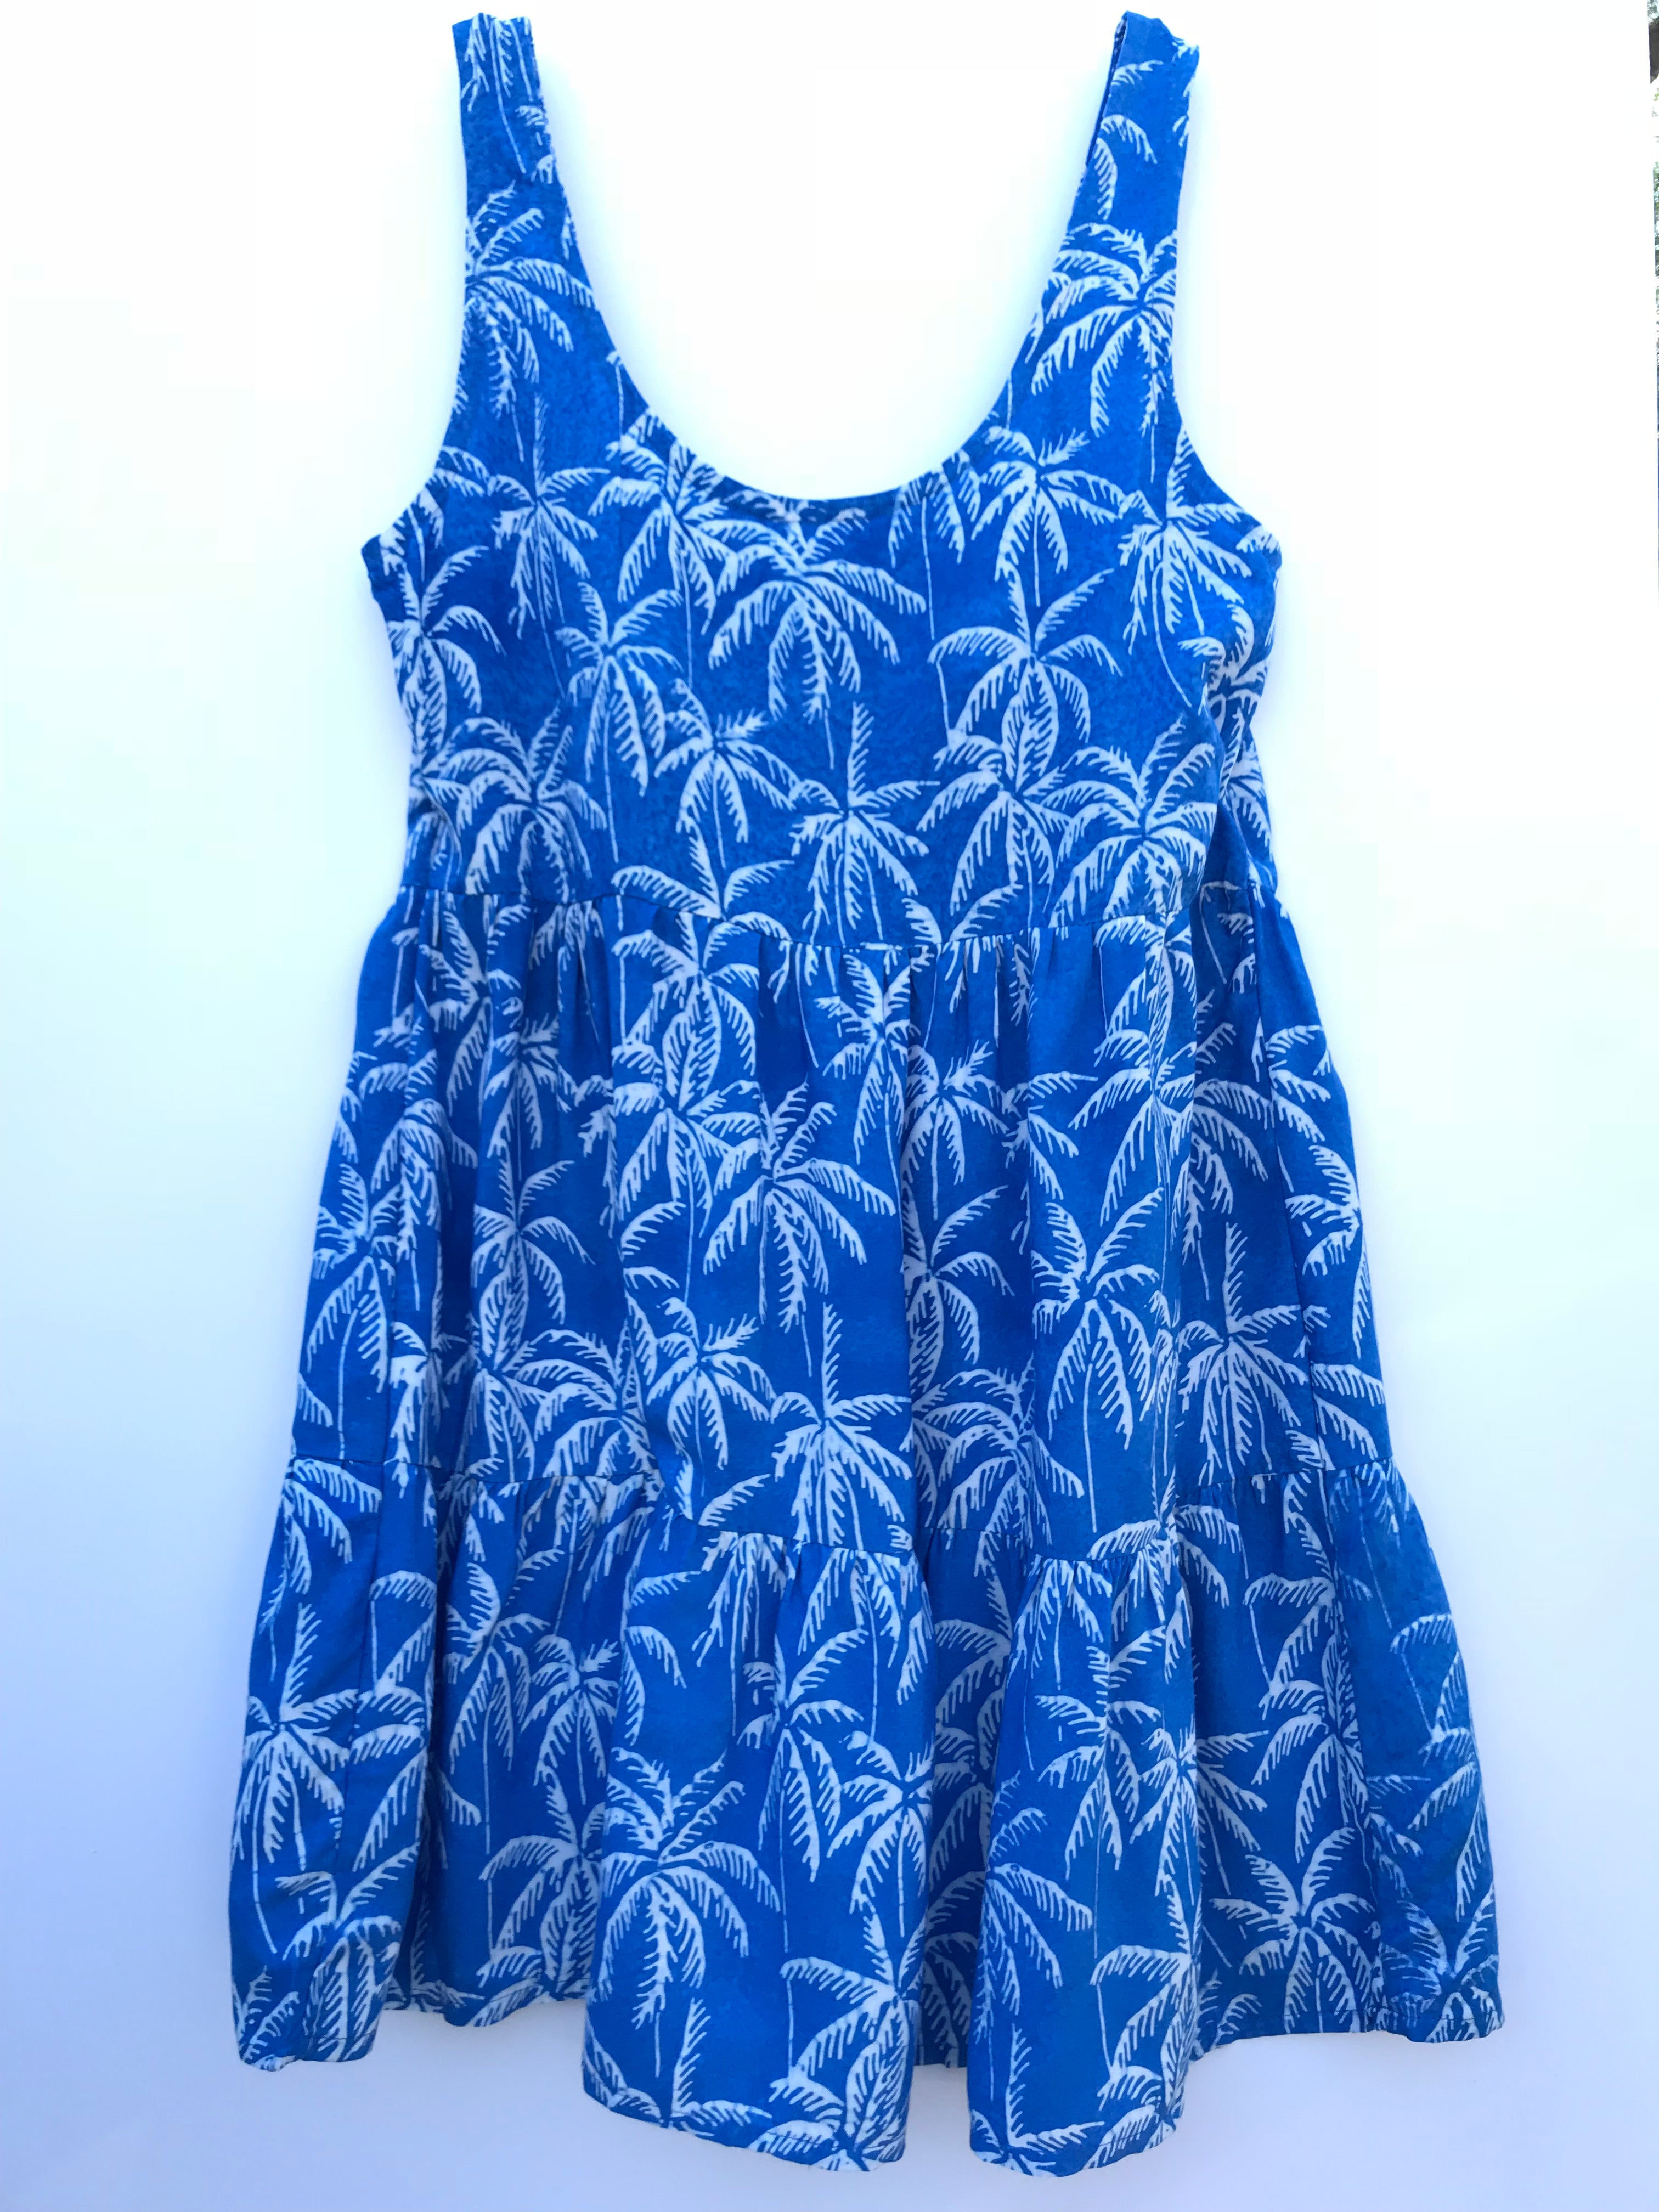 Kuta Beach Dress - Tall Palms